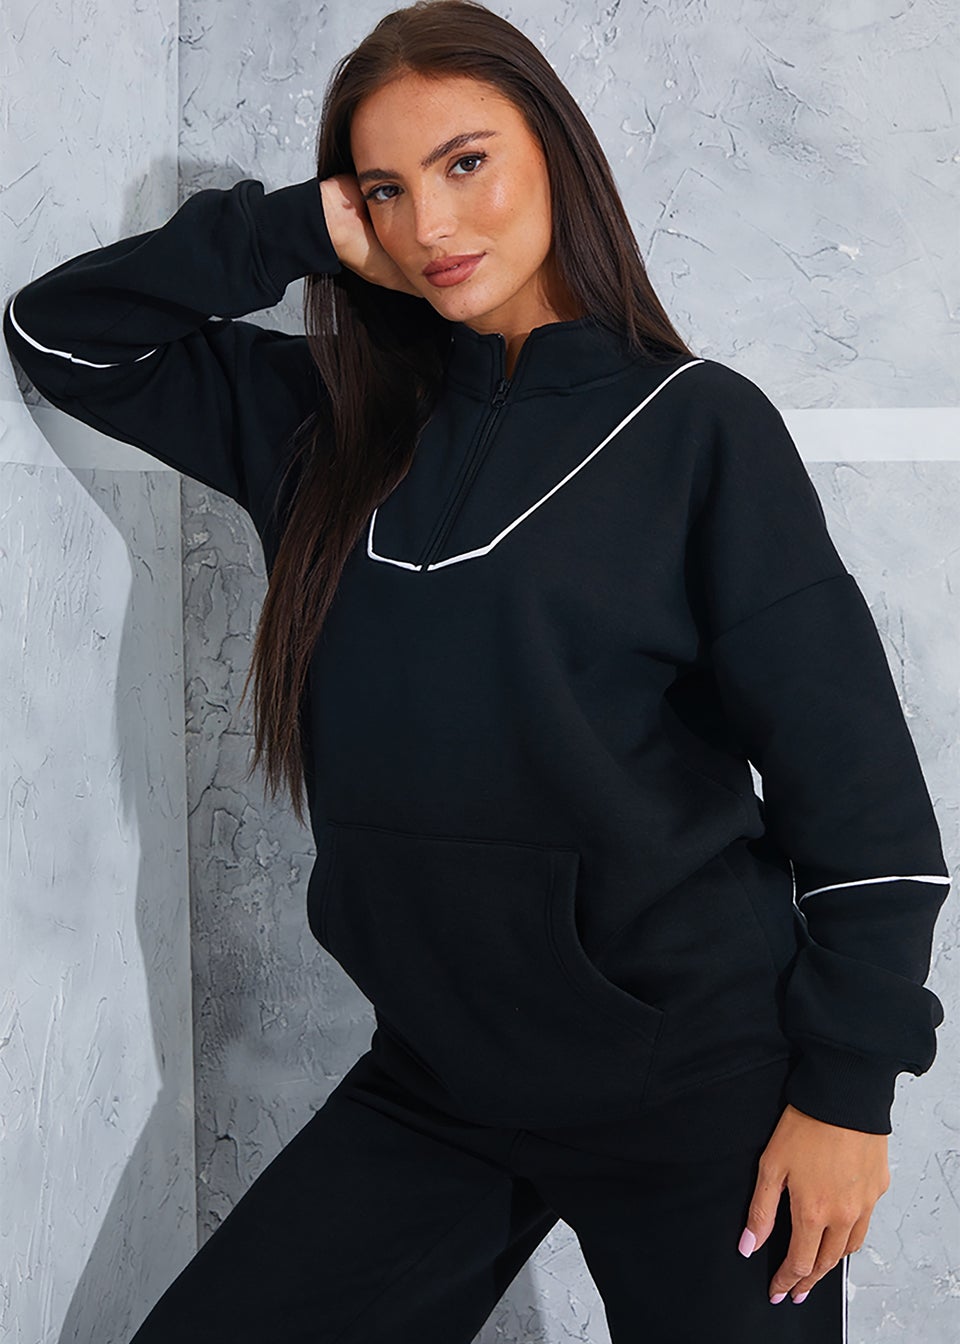 In the Style Gemma Atkinson Black Half Zip Sweatshirt - Matalan